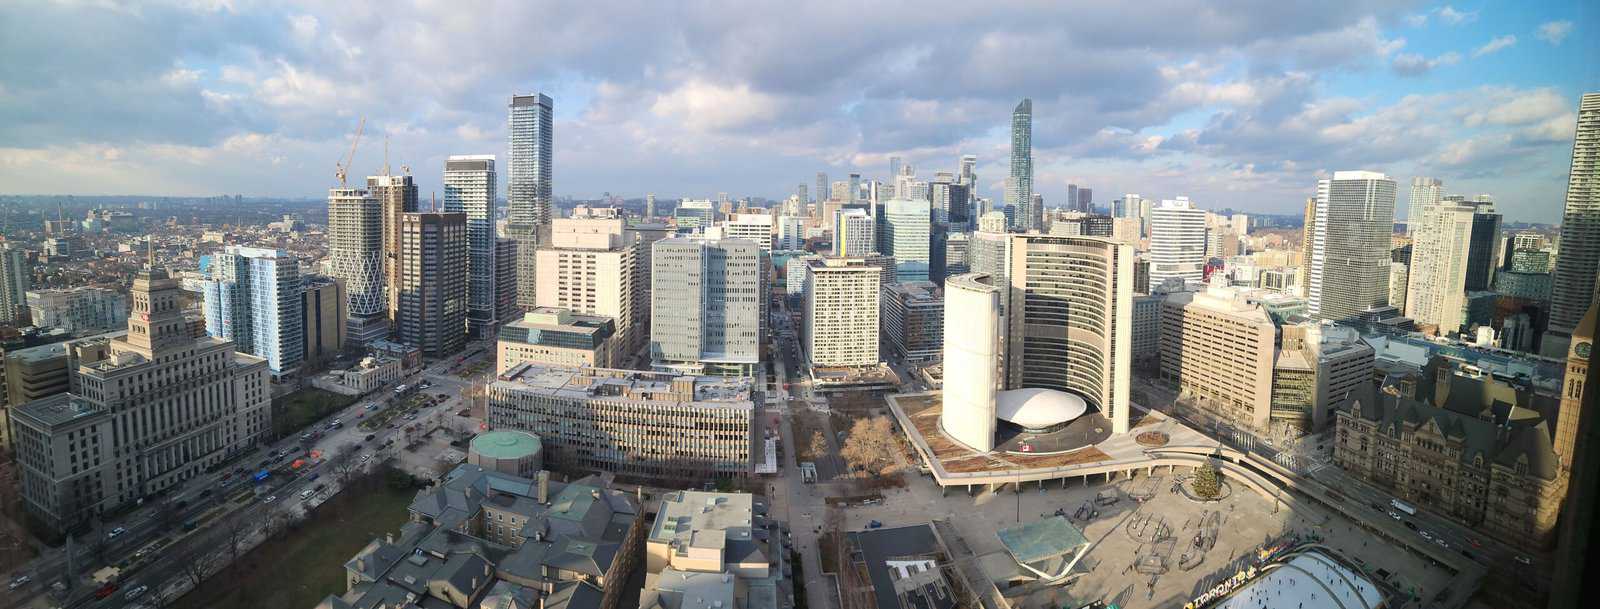 Sheraton Centre Toronto - Panoramic view looking uptown